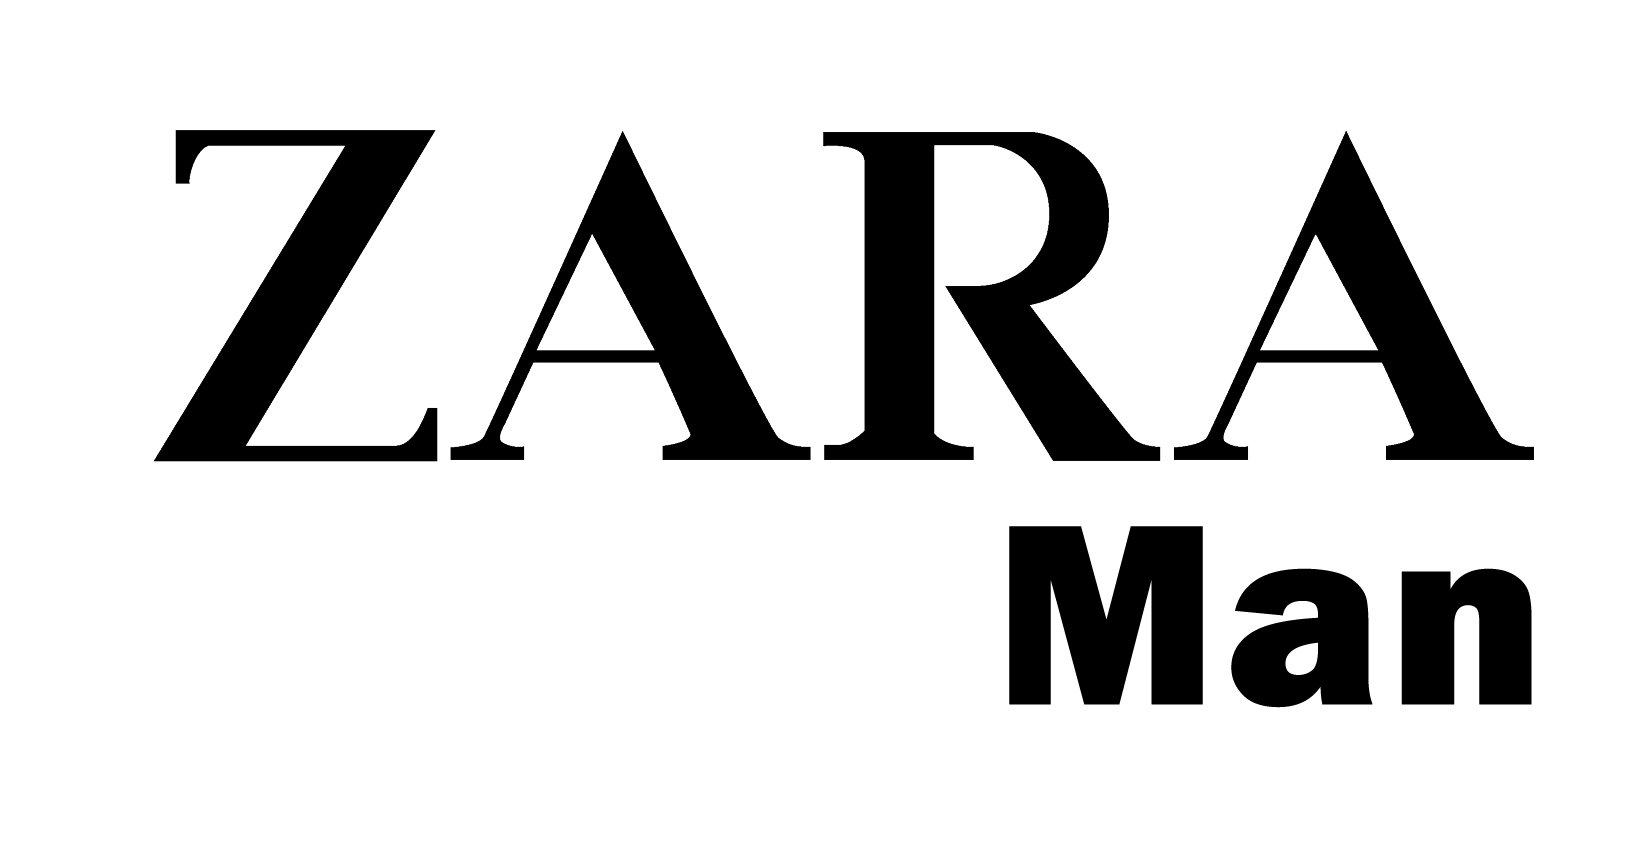 Zara Man Garments Products Suppliers